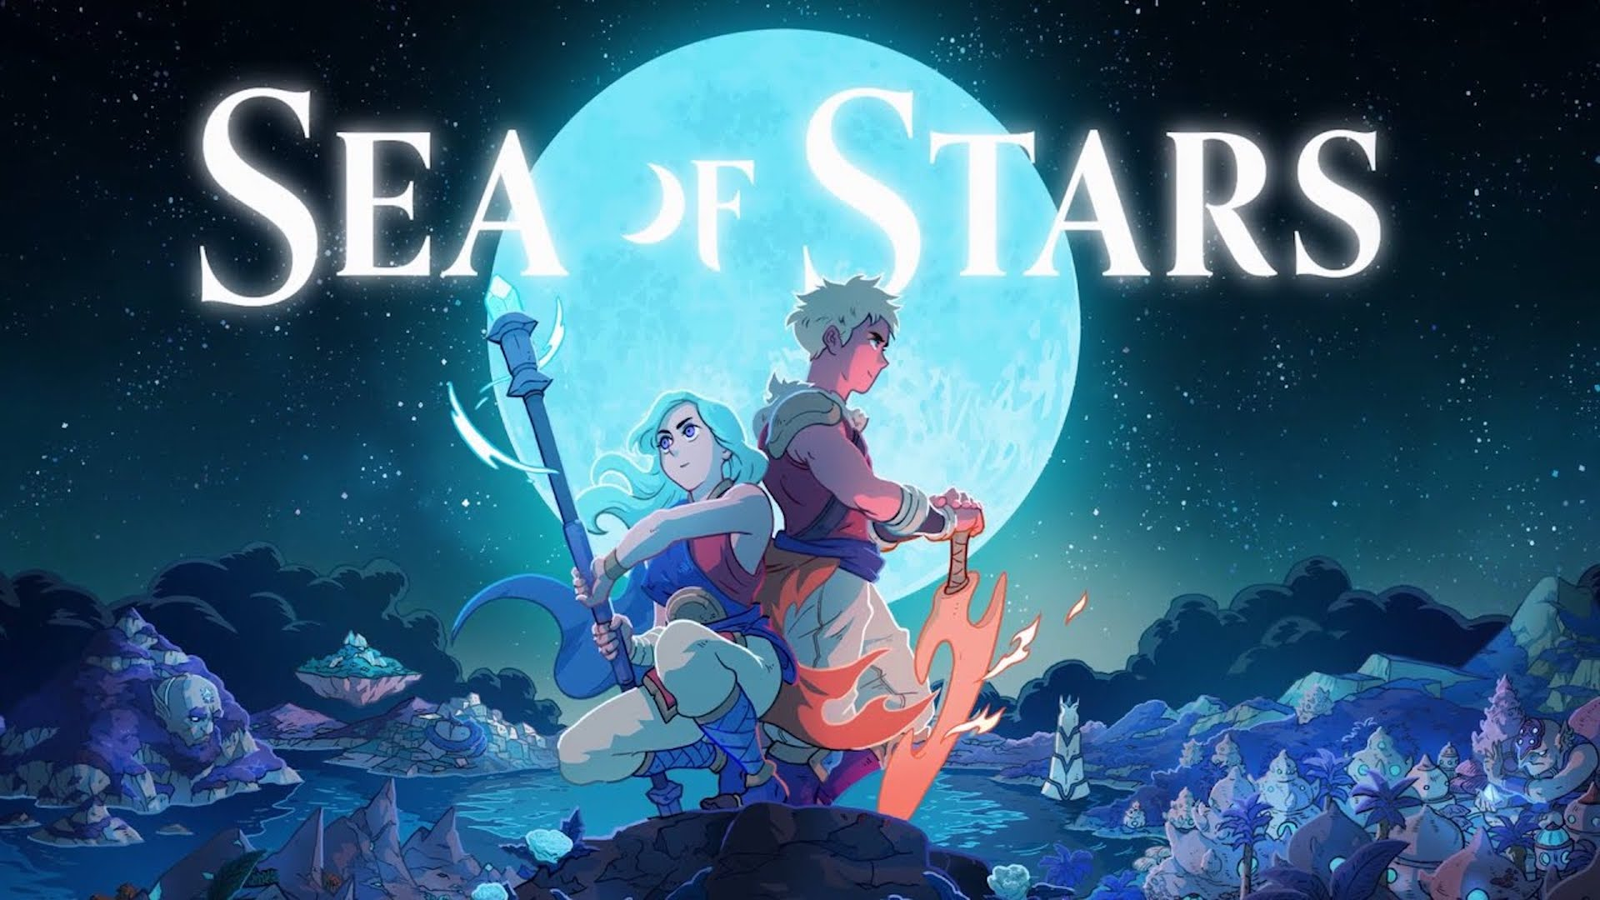 Sea of Stars (Switch), RPG indie em estilo clássico de turnos